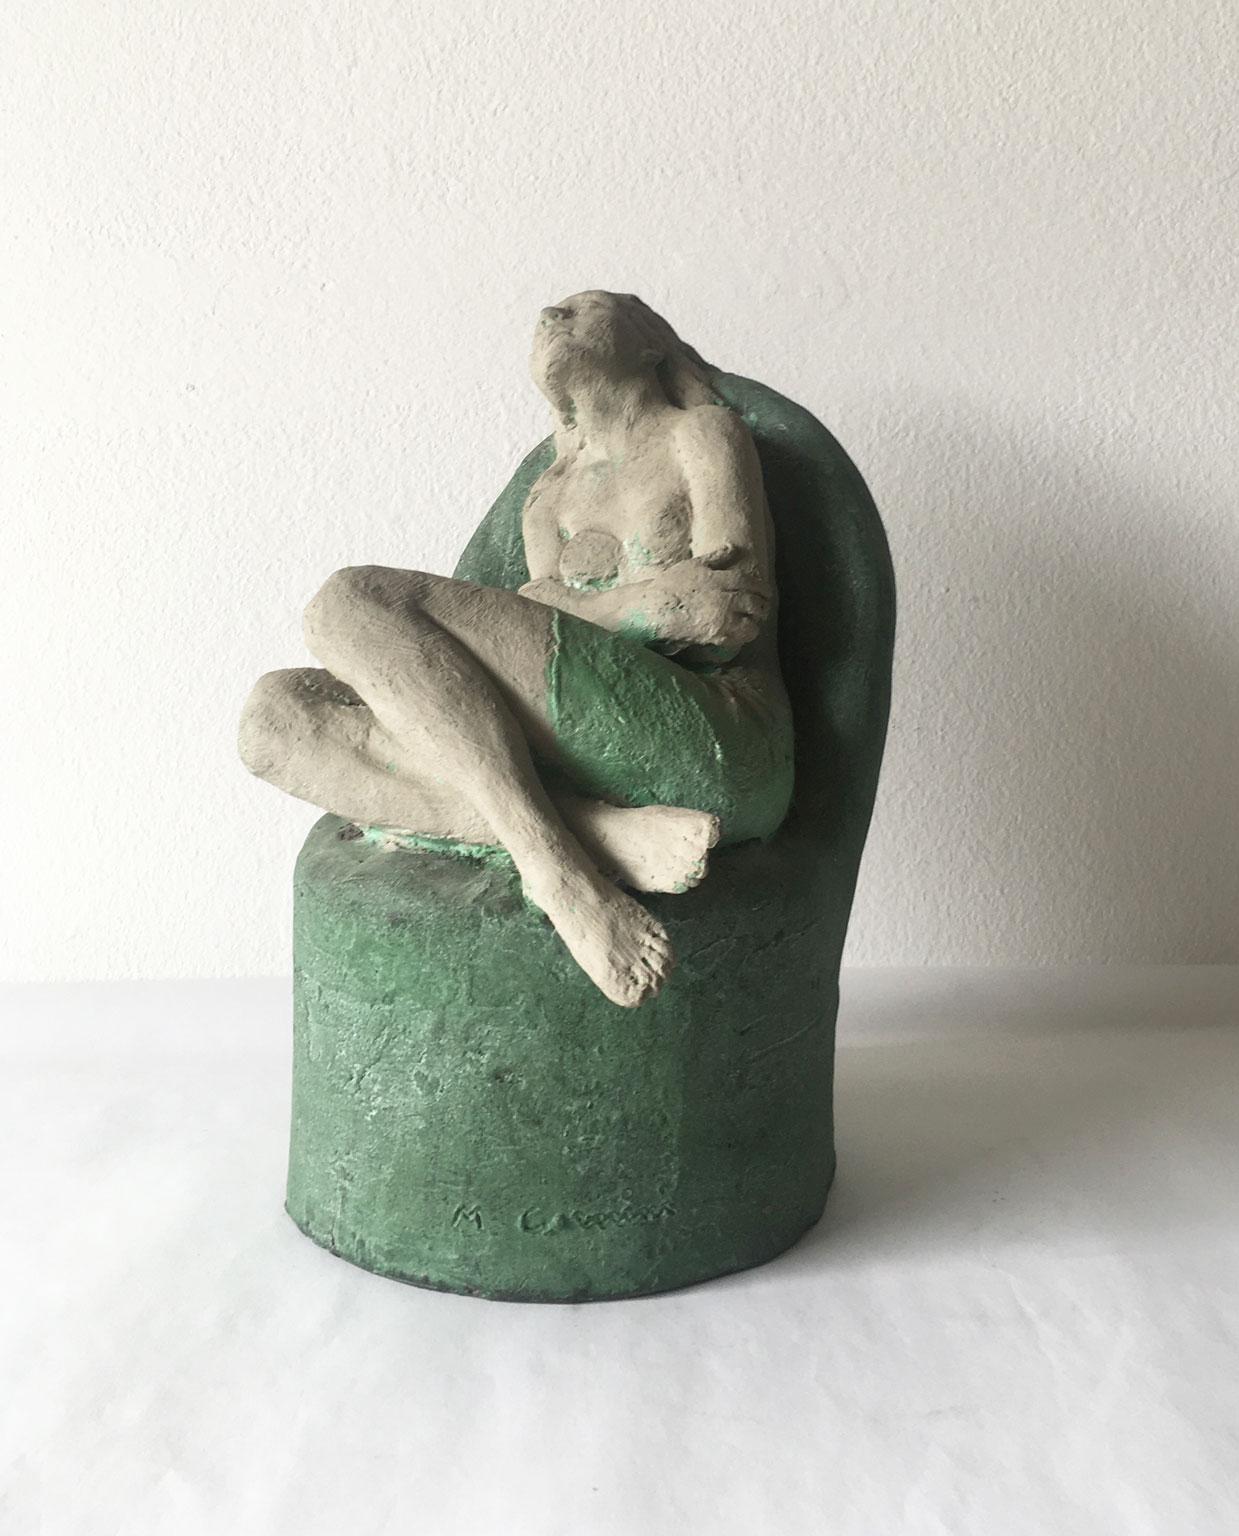 1998 Italy Bronze Woman Figurine Sculpture by Marco Cornini Attesa For Sale 14